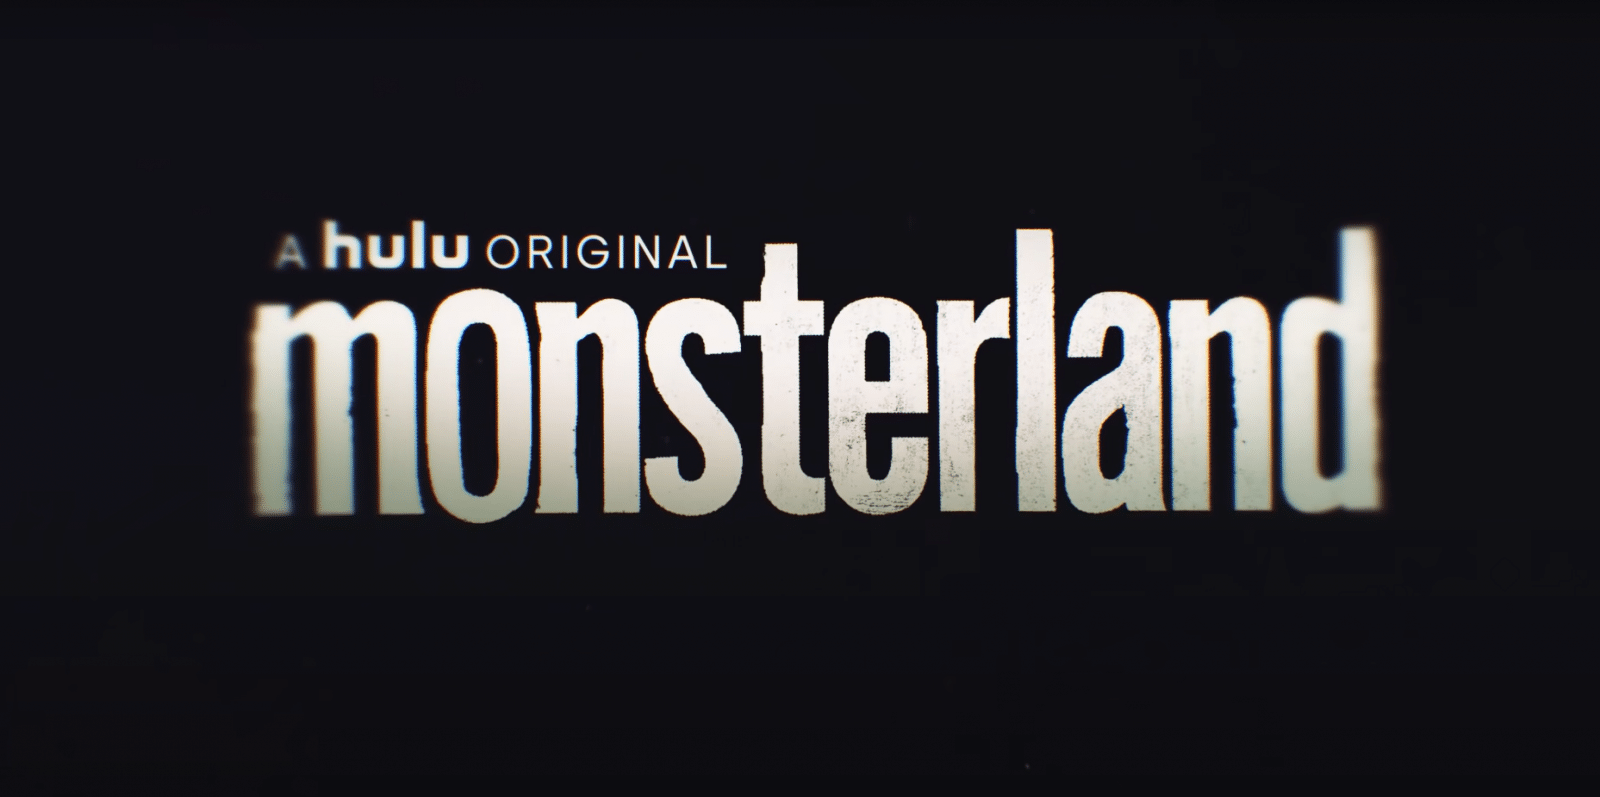 Monsterland Hulu Original